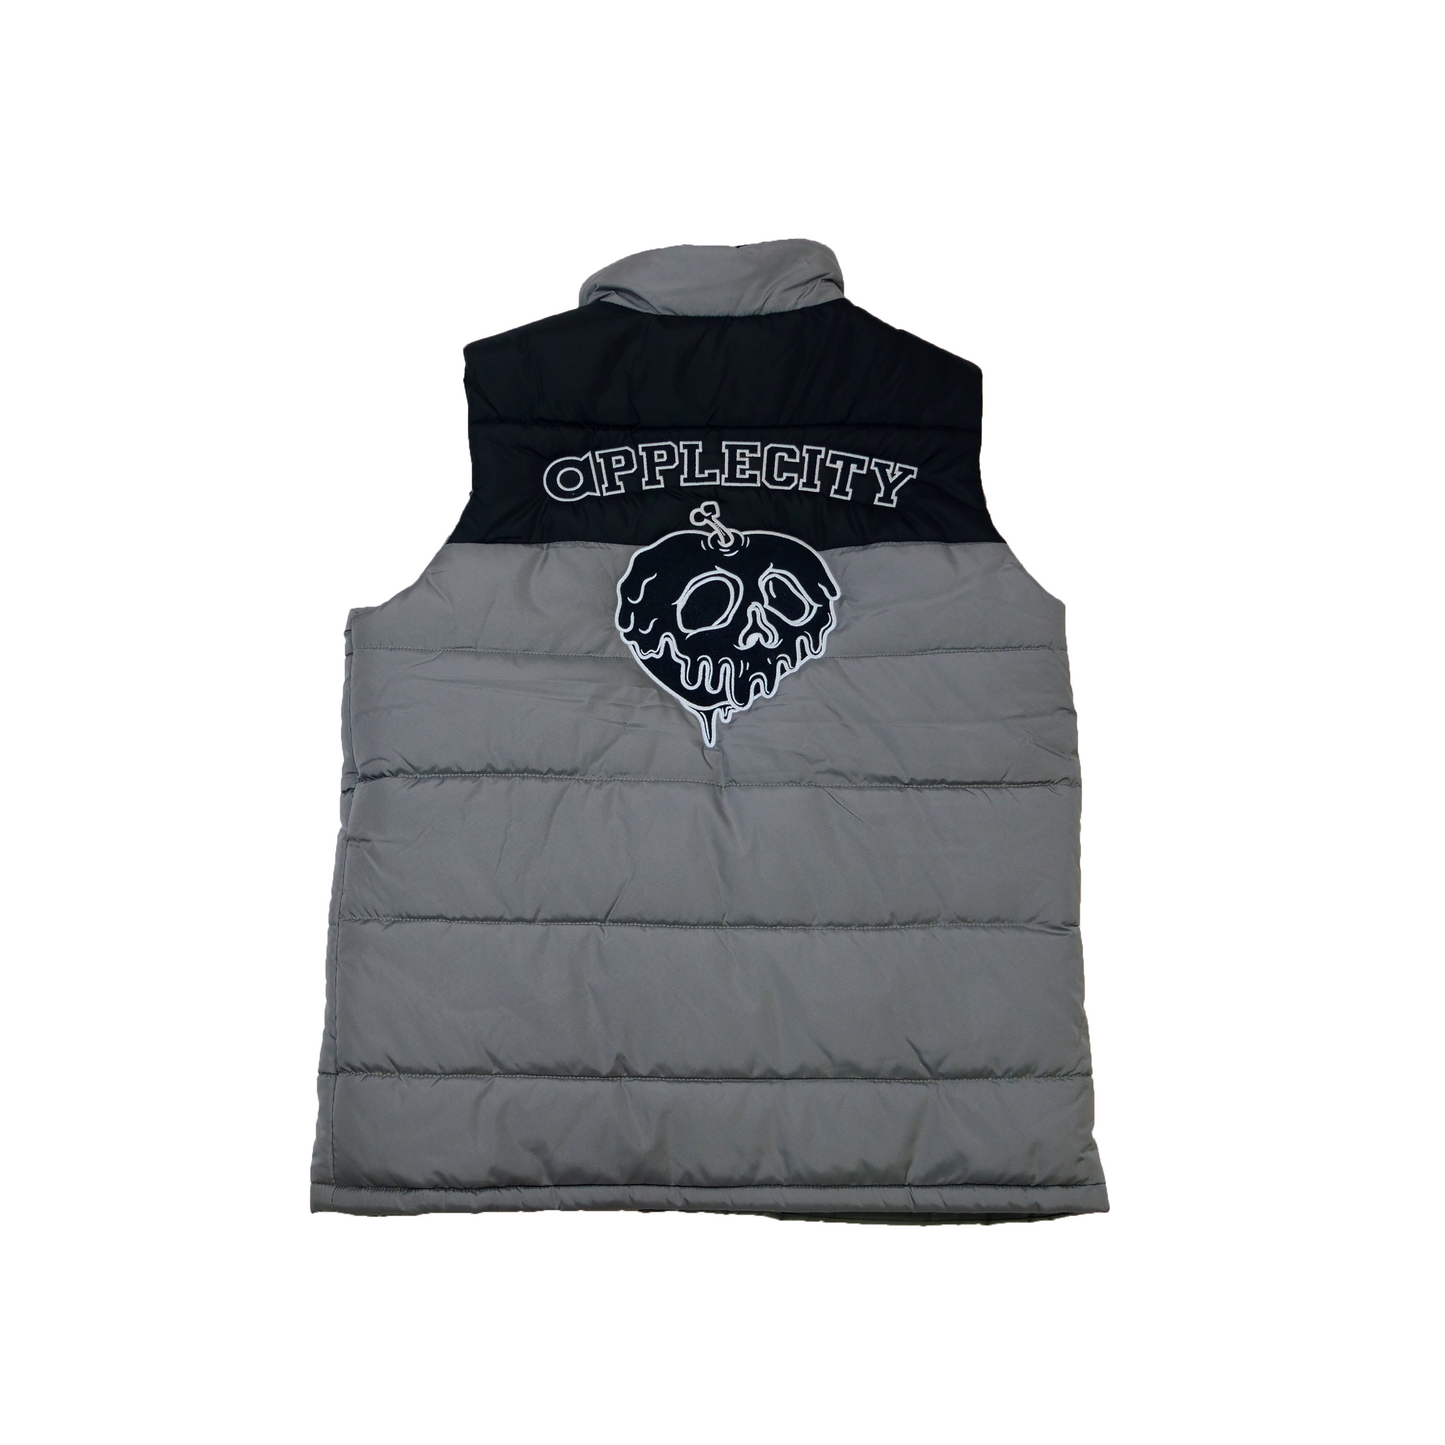 Applecity vest - Gray